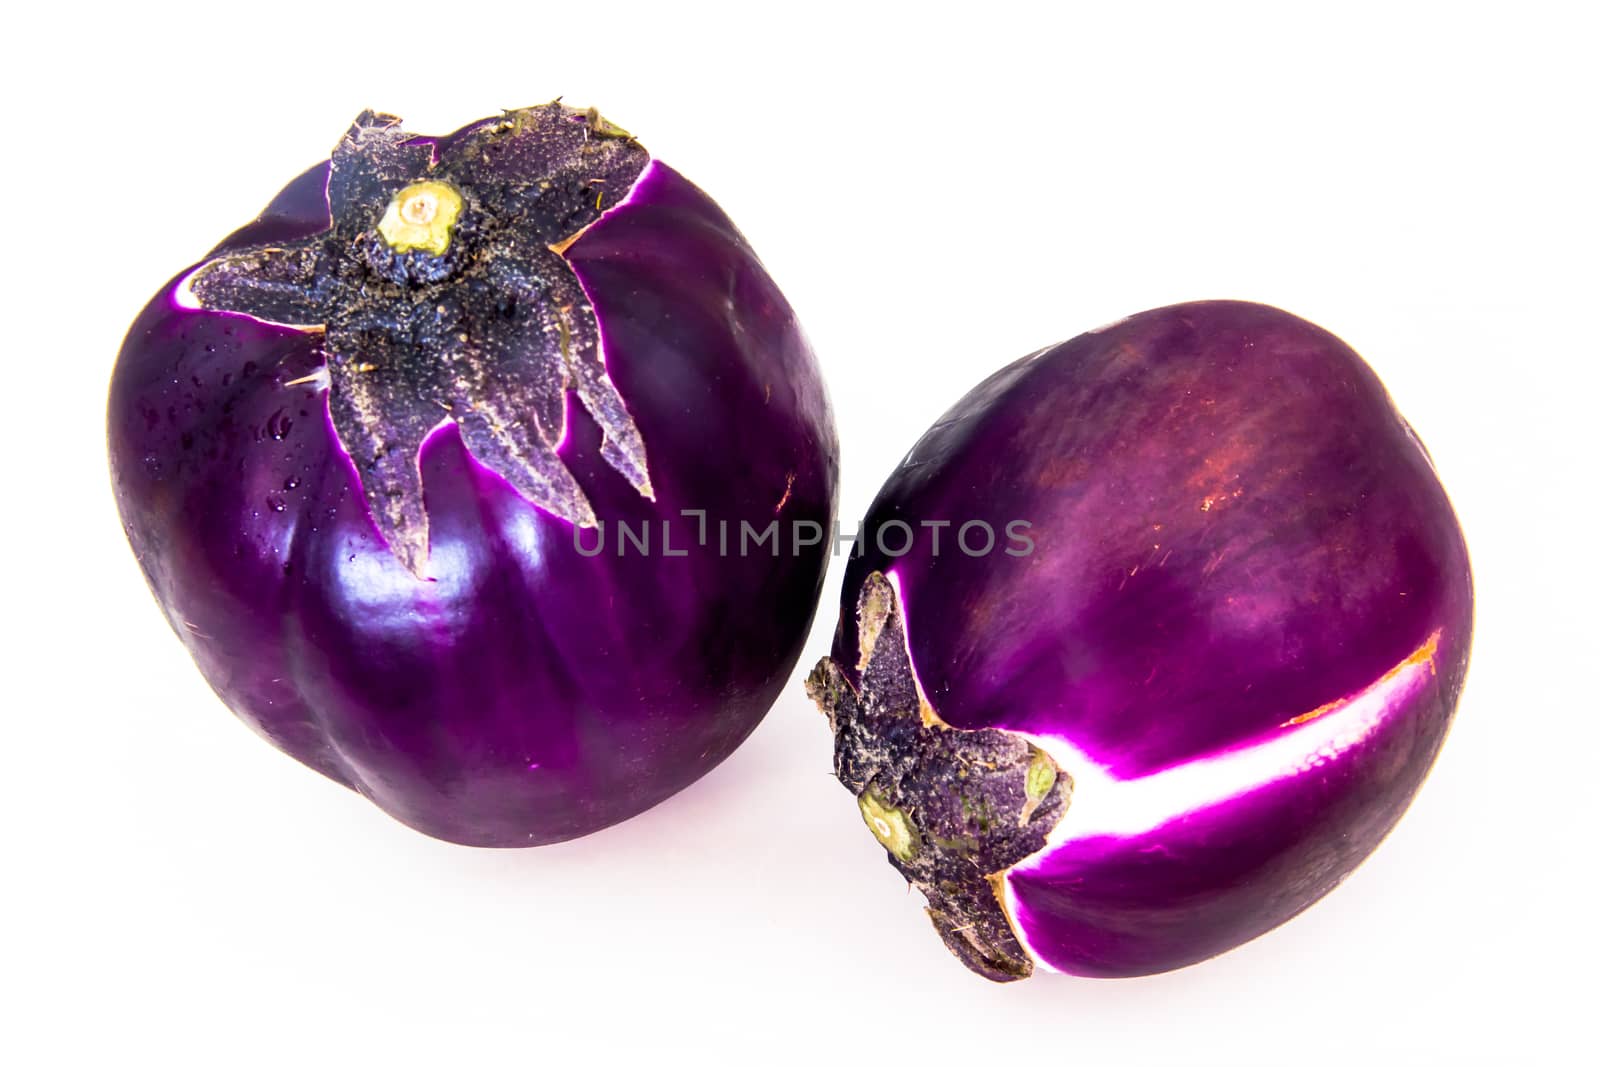 Round eggplants on white background